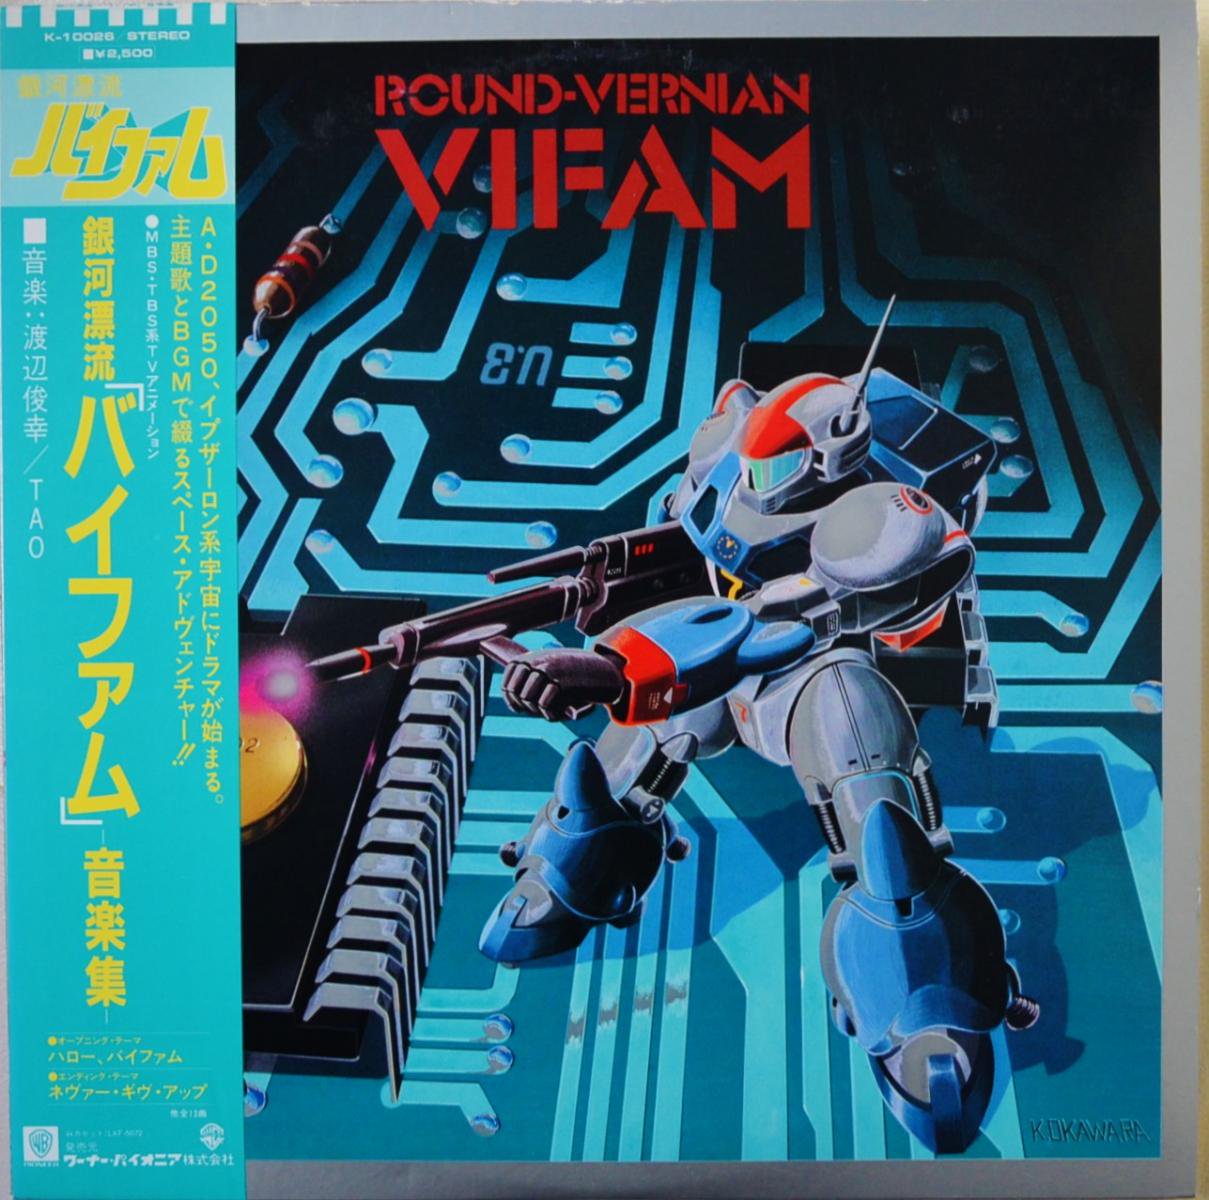 O S T 渡辺俊幸 Toshiyuki Watanabe 銀河漂流 バイファム 音楽集 Round Vernian Vifam Lp Hip Tank Records